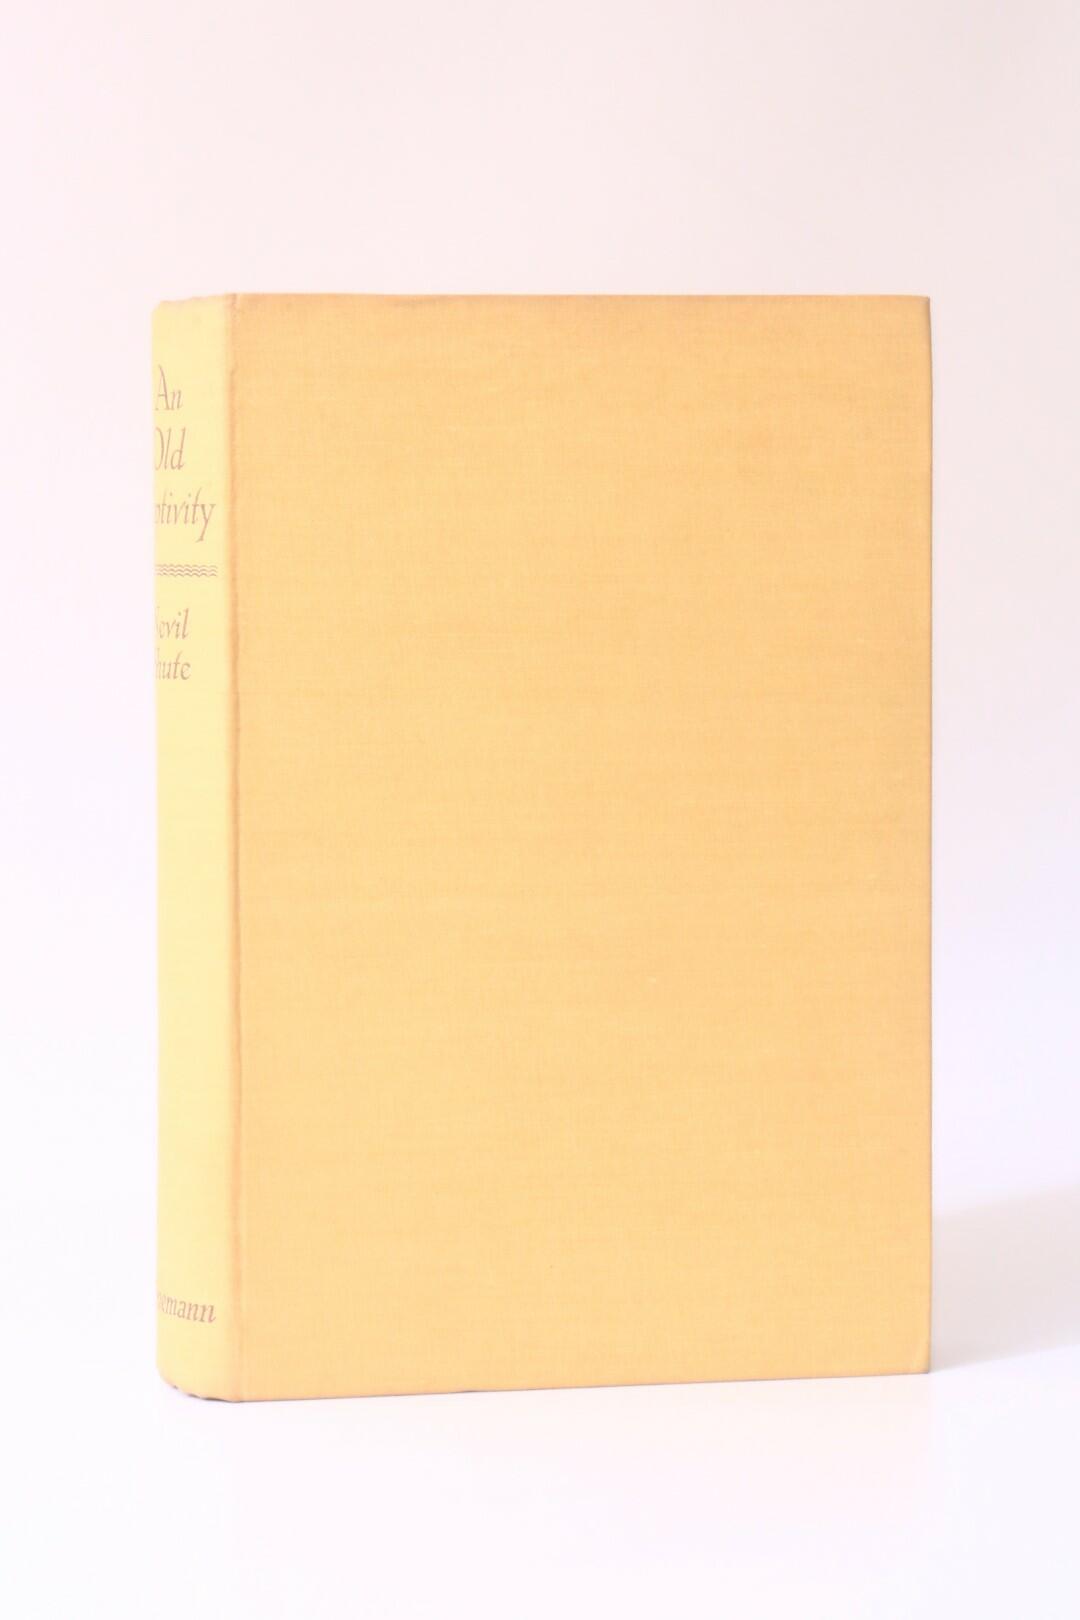 Nevil Shute - An Old Captivity - Heinemann, 1940, First Edition.